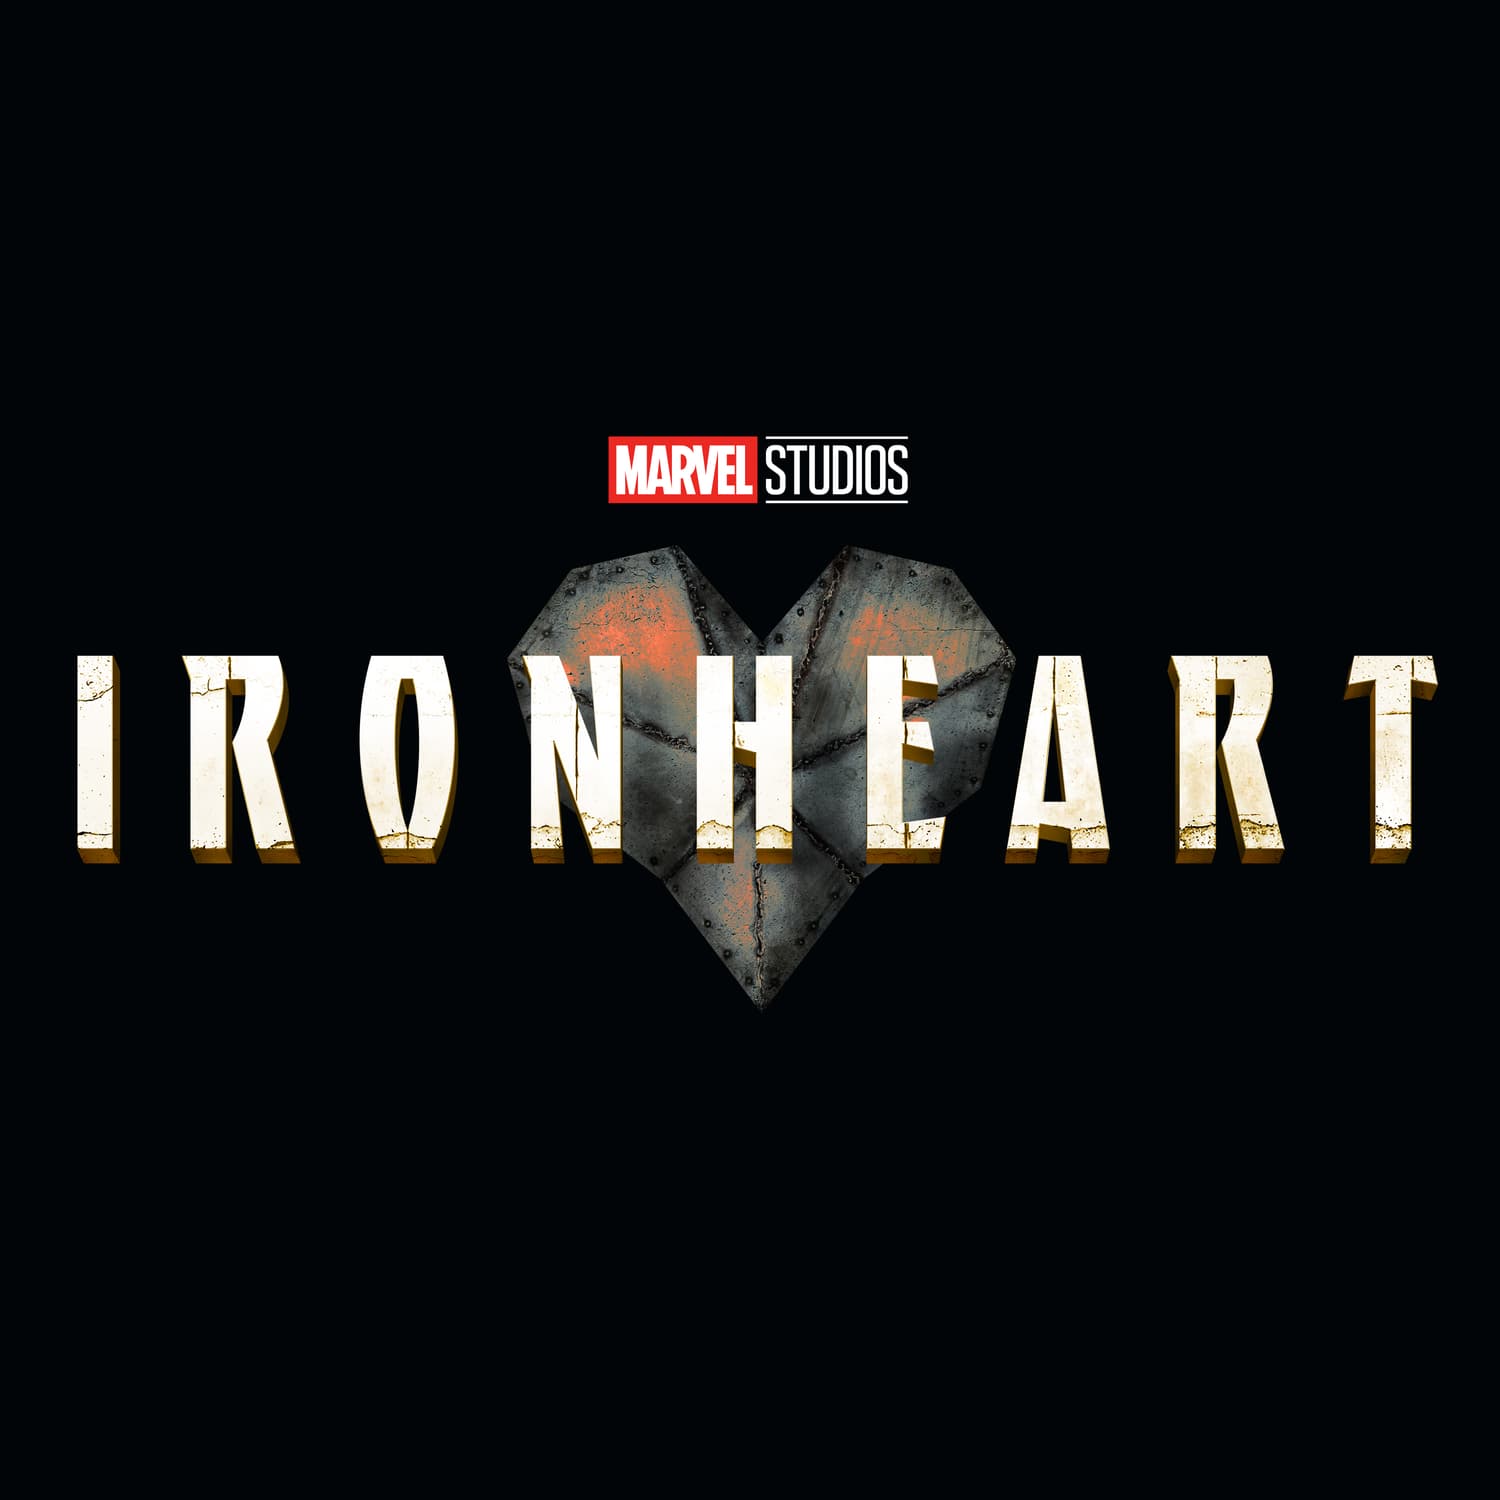 Marvel Studios' Ironheart